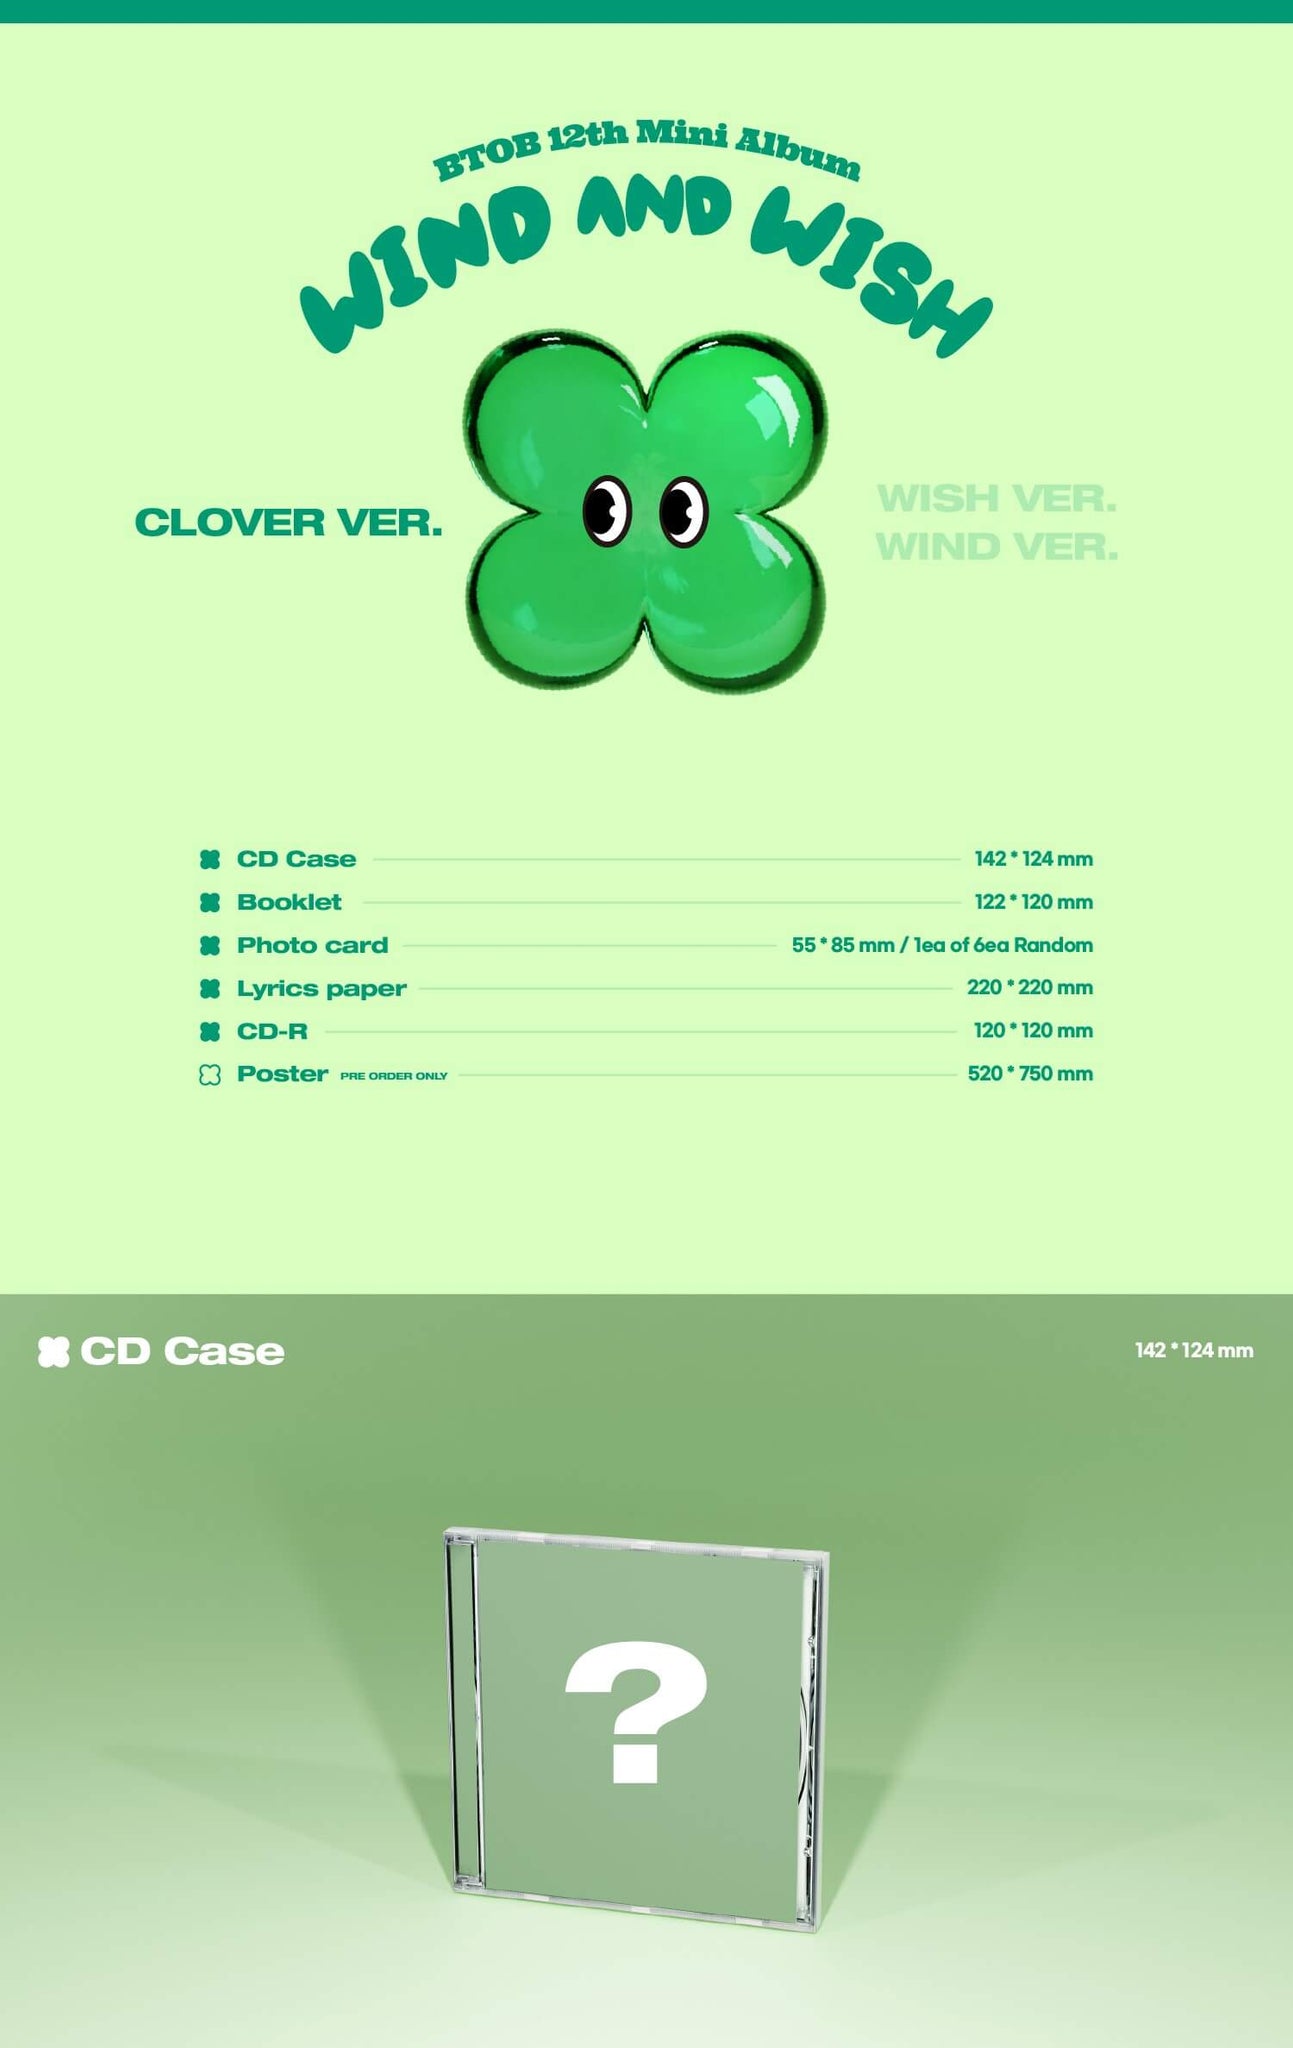 BTOB WIND AND WISH - CLOVER Version Inclusions Album Info CD Case